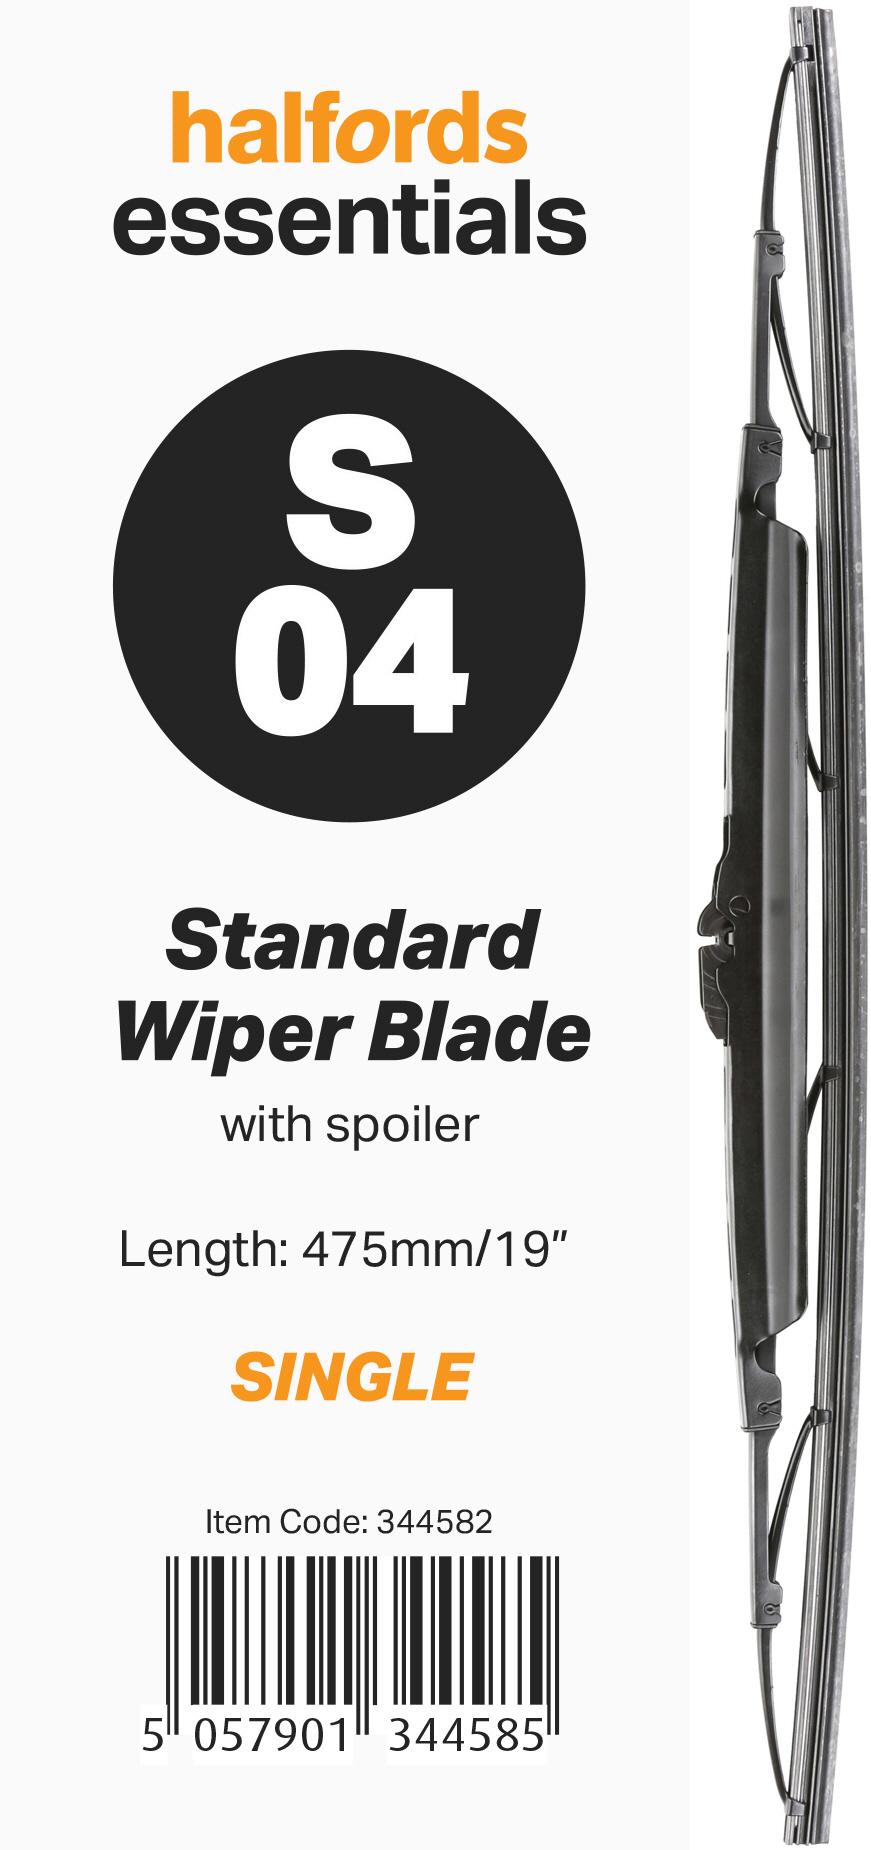 Halfords Essentials Spoiler Wiper Blade S04 - 19 Inch